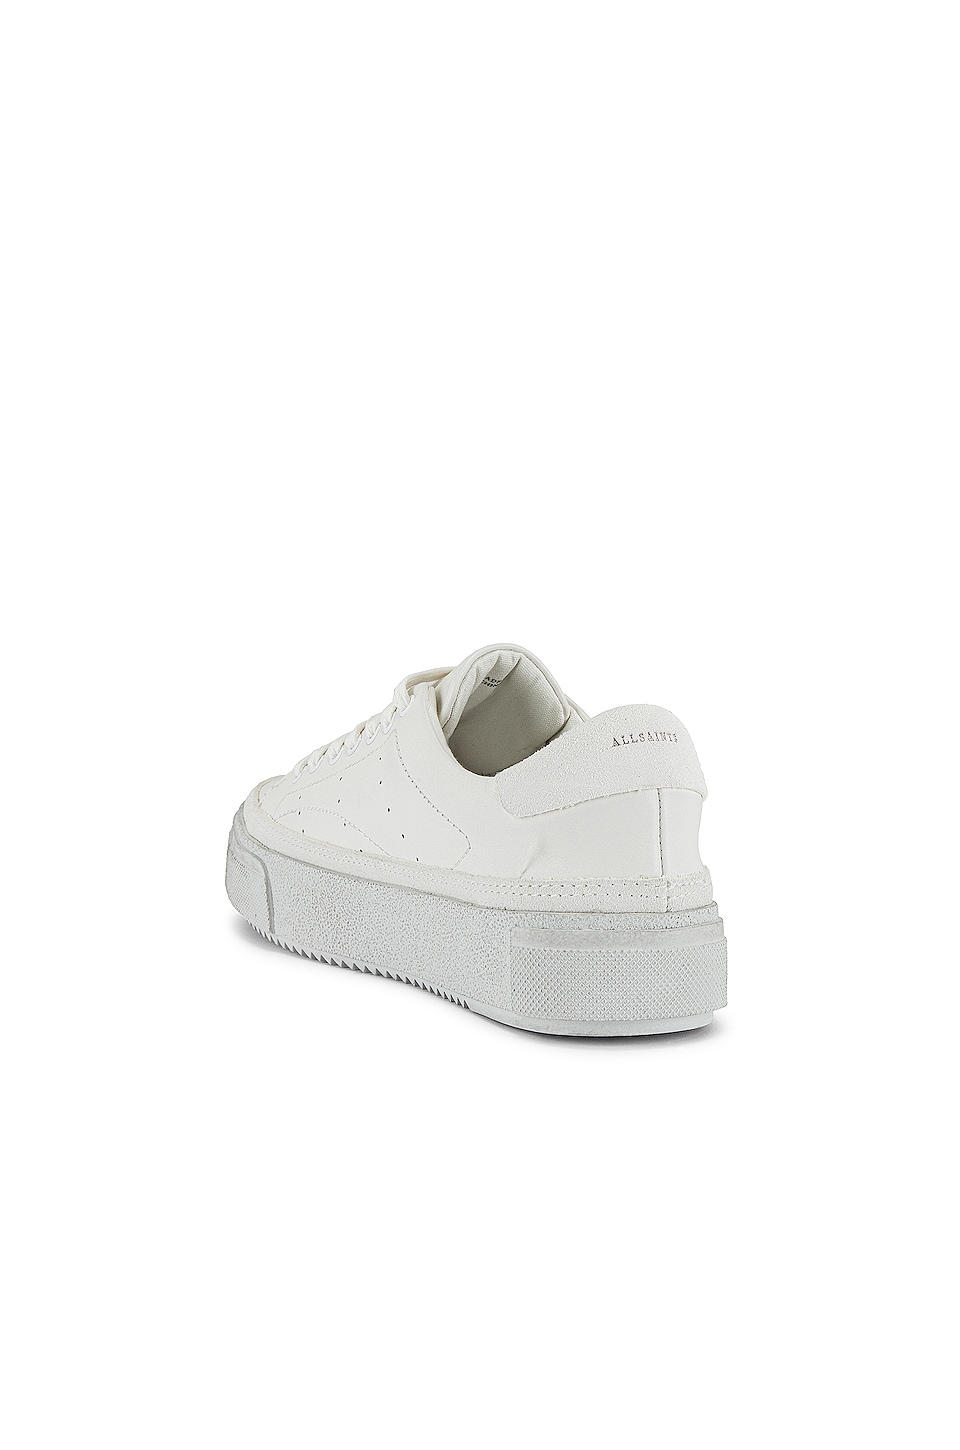 ALLSAINTS Trish Sneaker in Chalk White | REVOLVE